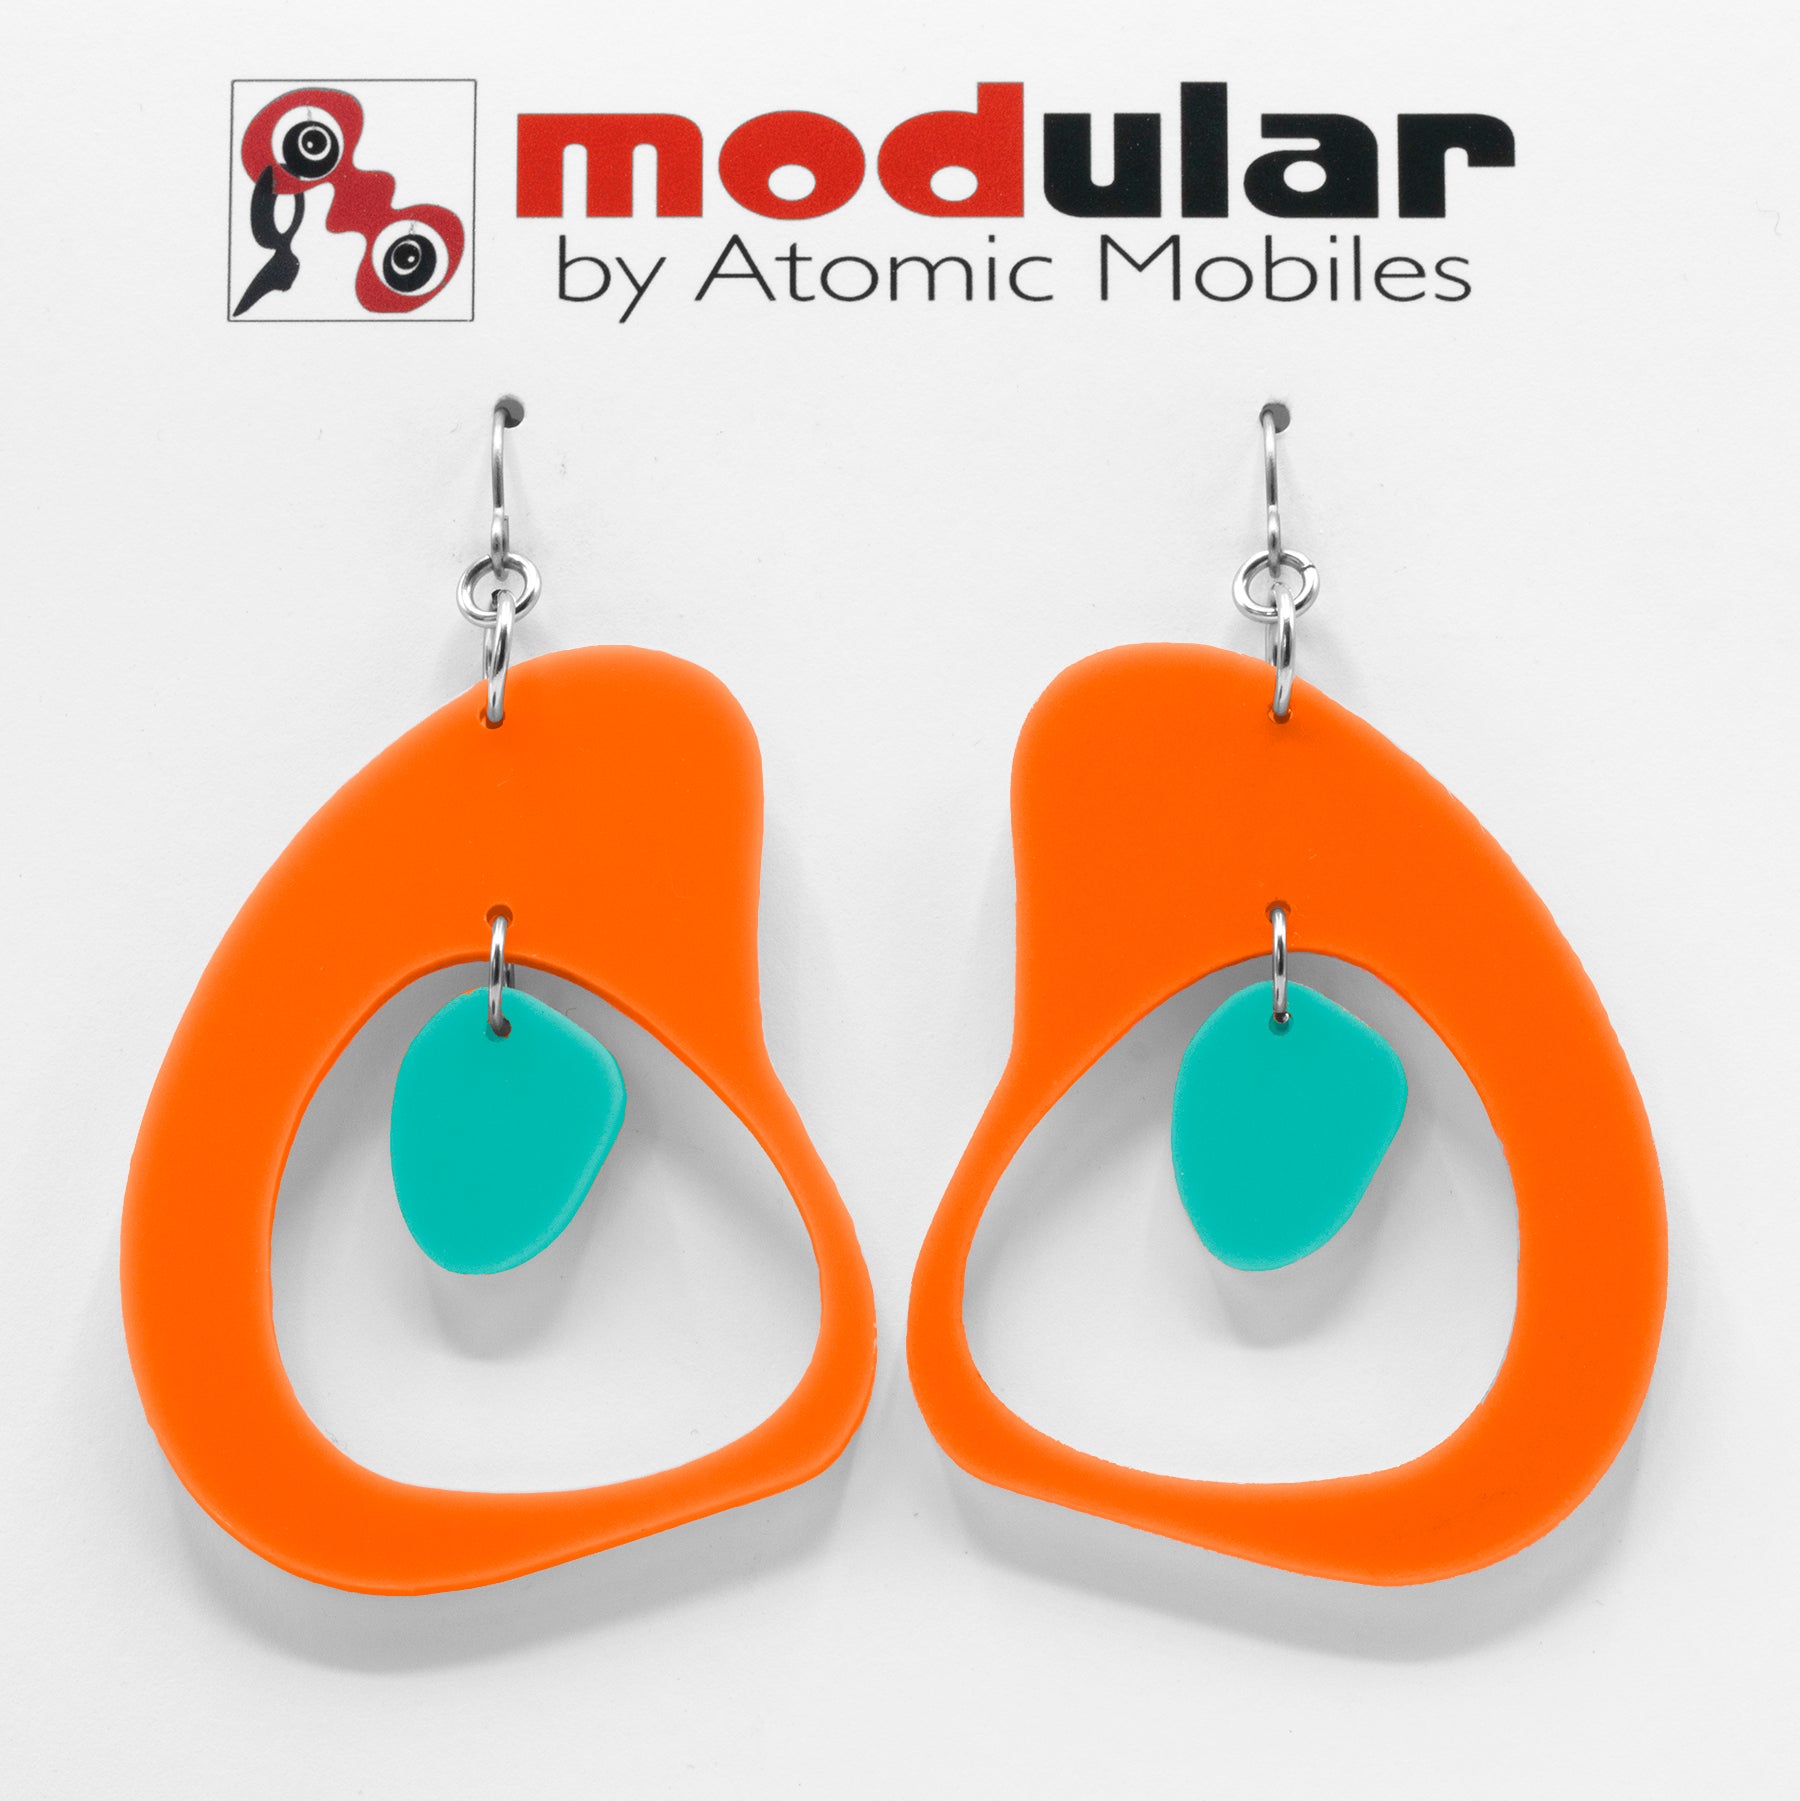 MODular Earrings - Boomerang Statement Earrings in Orange and Aqua by AtomicMobiles.com - retro era inspired mod handmade jewelry